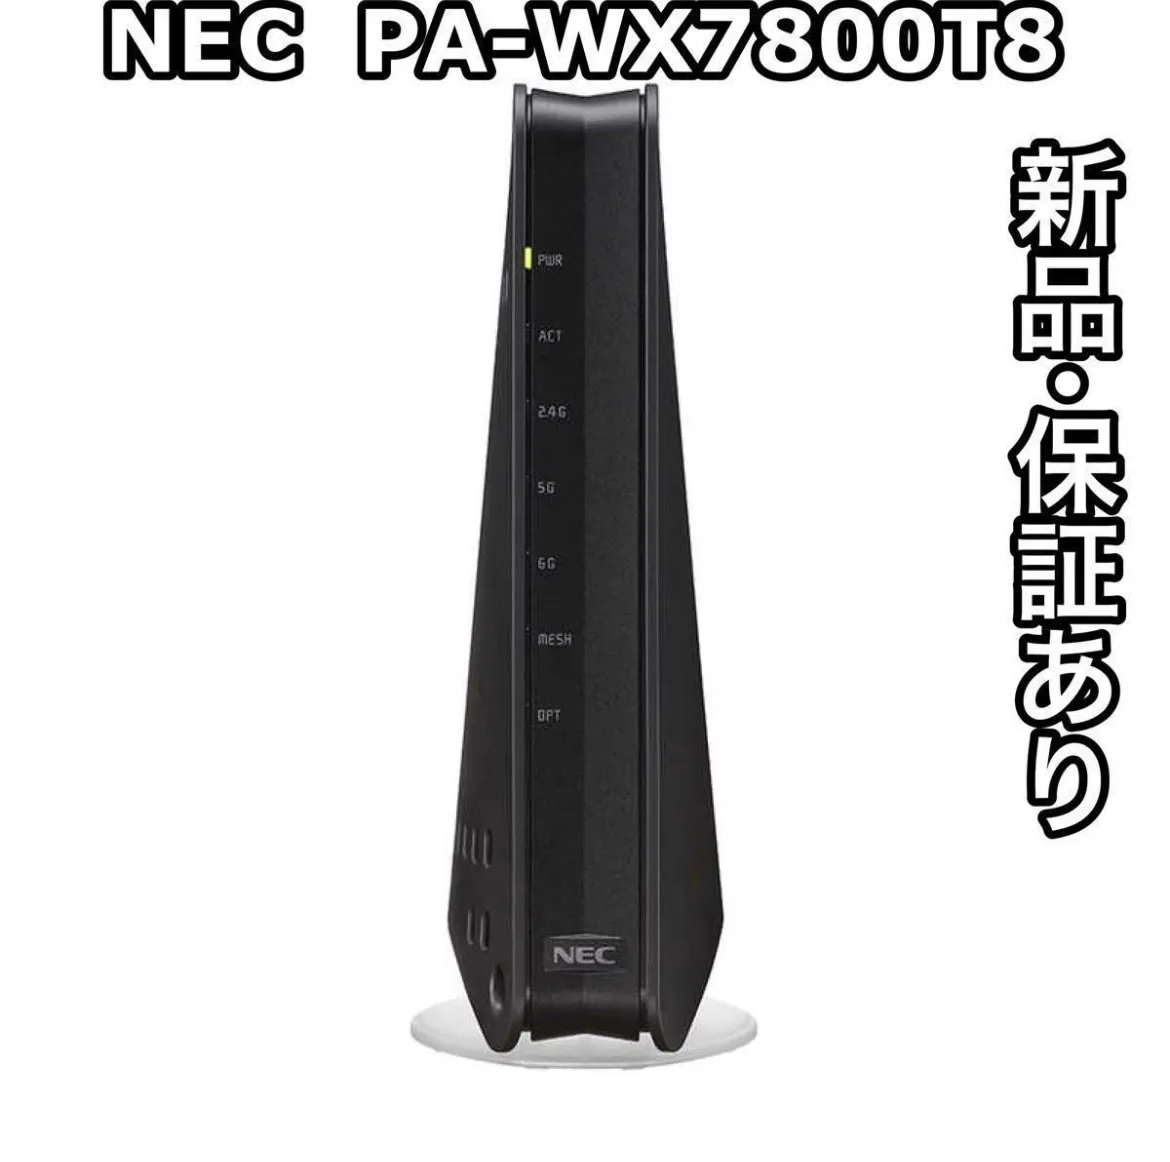 NEC PA-WX7800T8 BLACK 無線LANルータ-